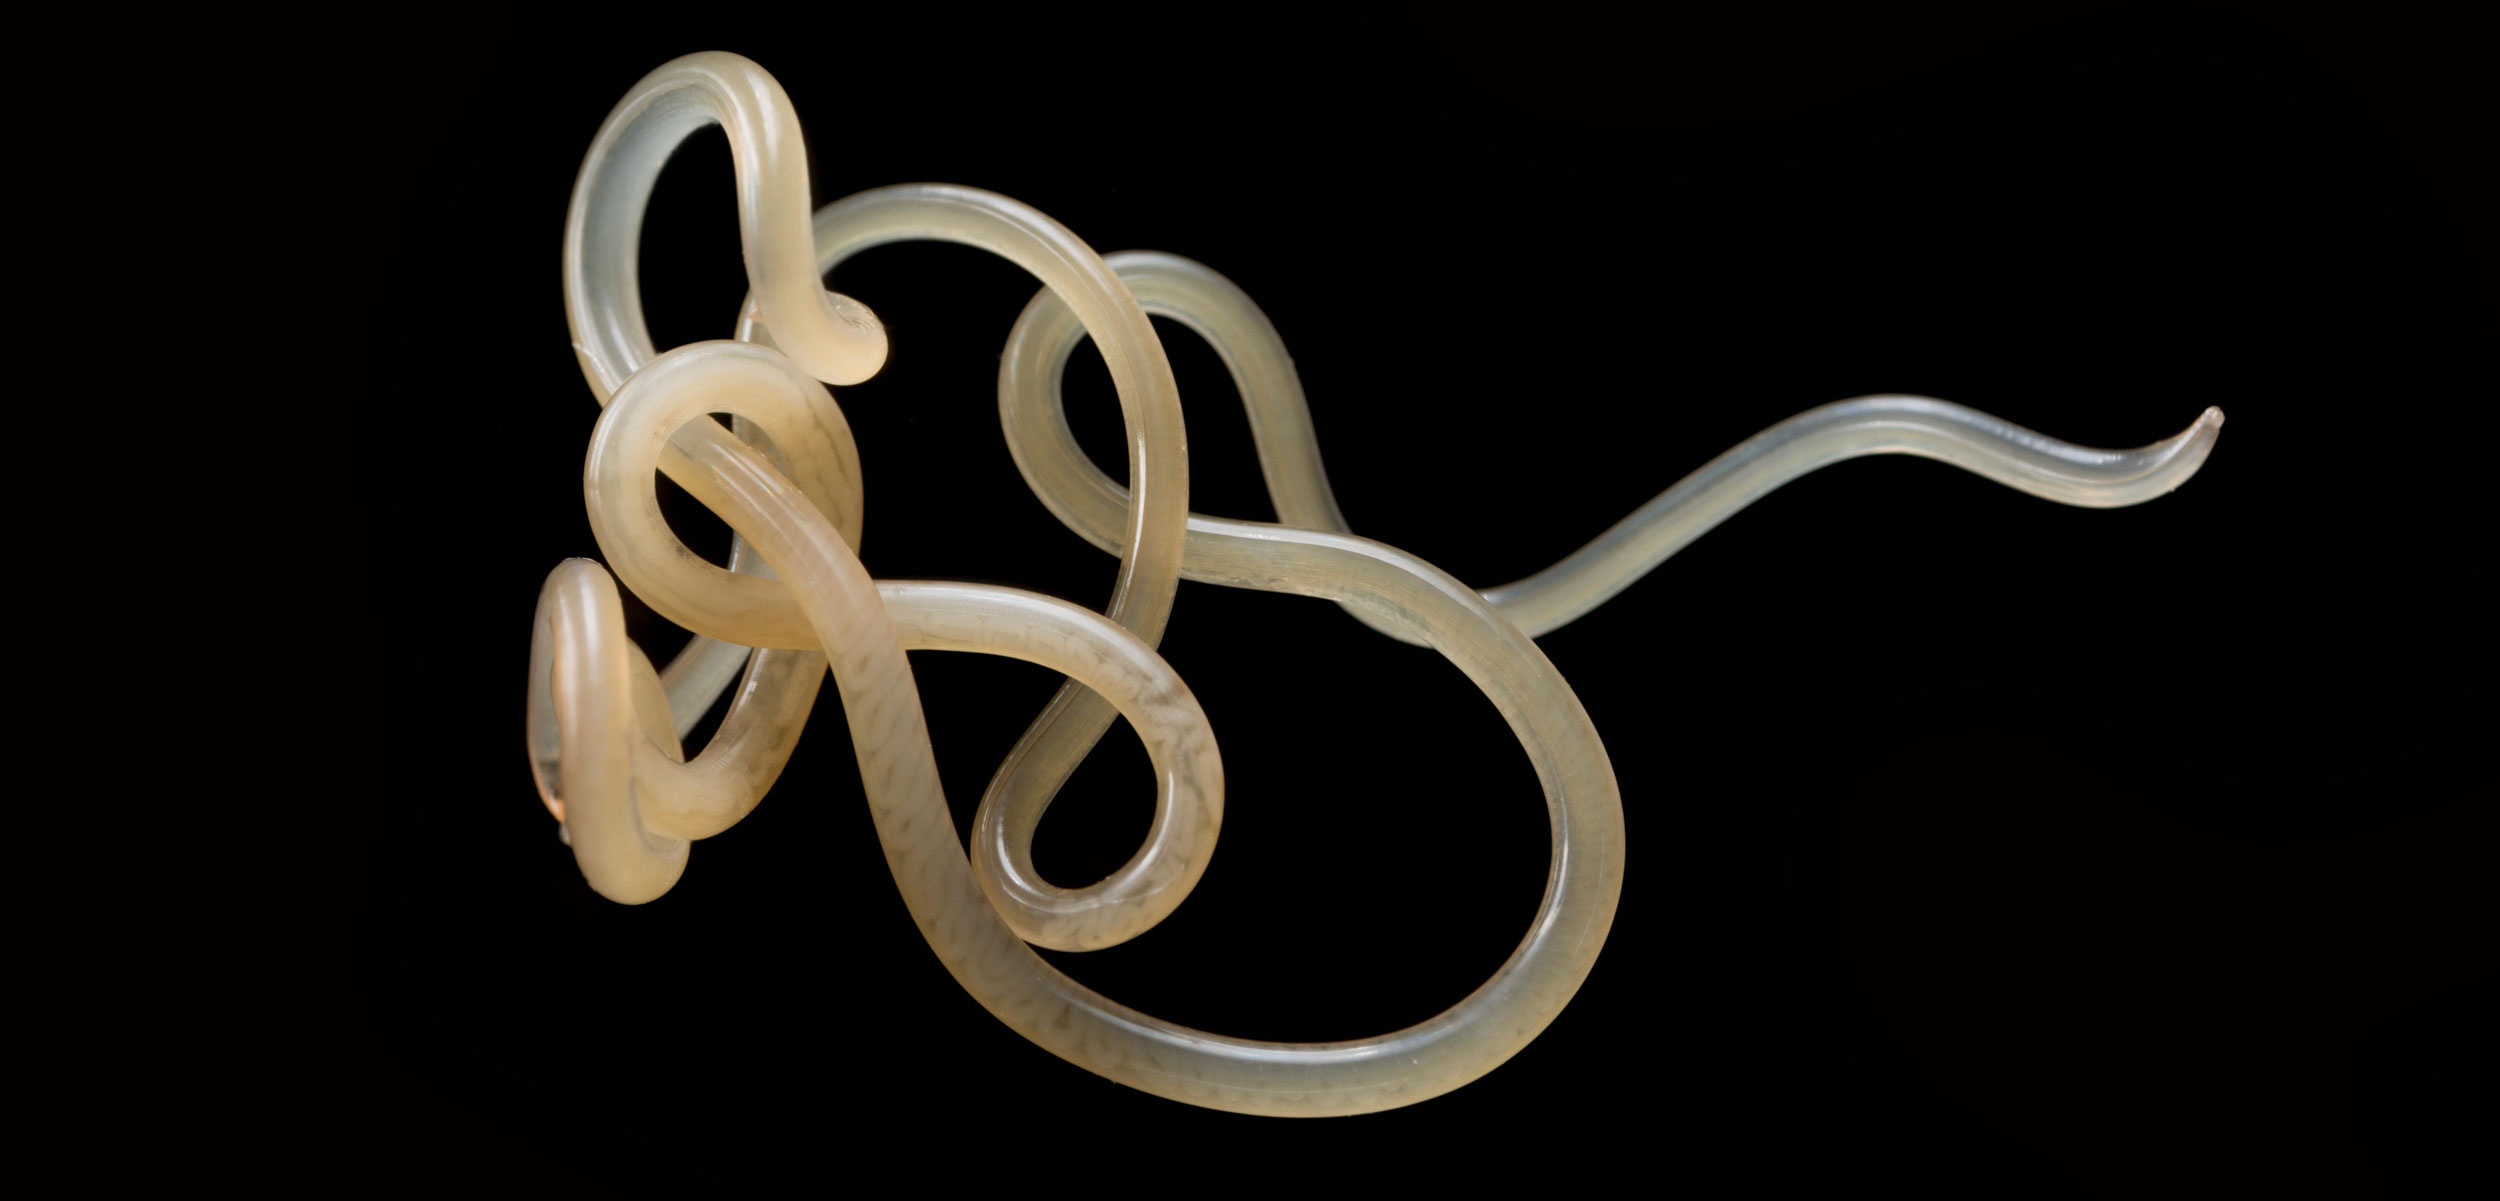 Two parasitic nematode worms